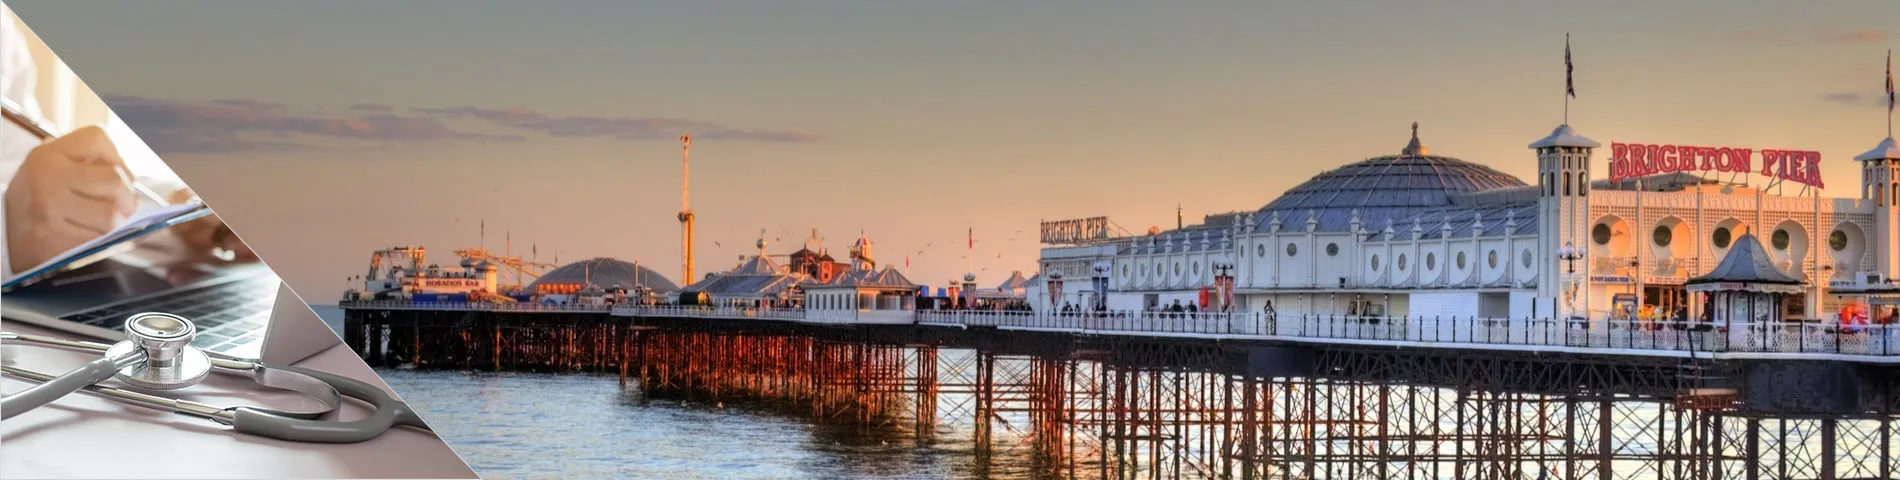 Brighton - Angličtina pro Doktory a sestry